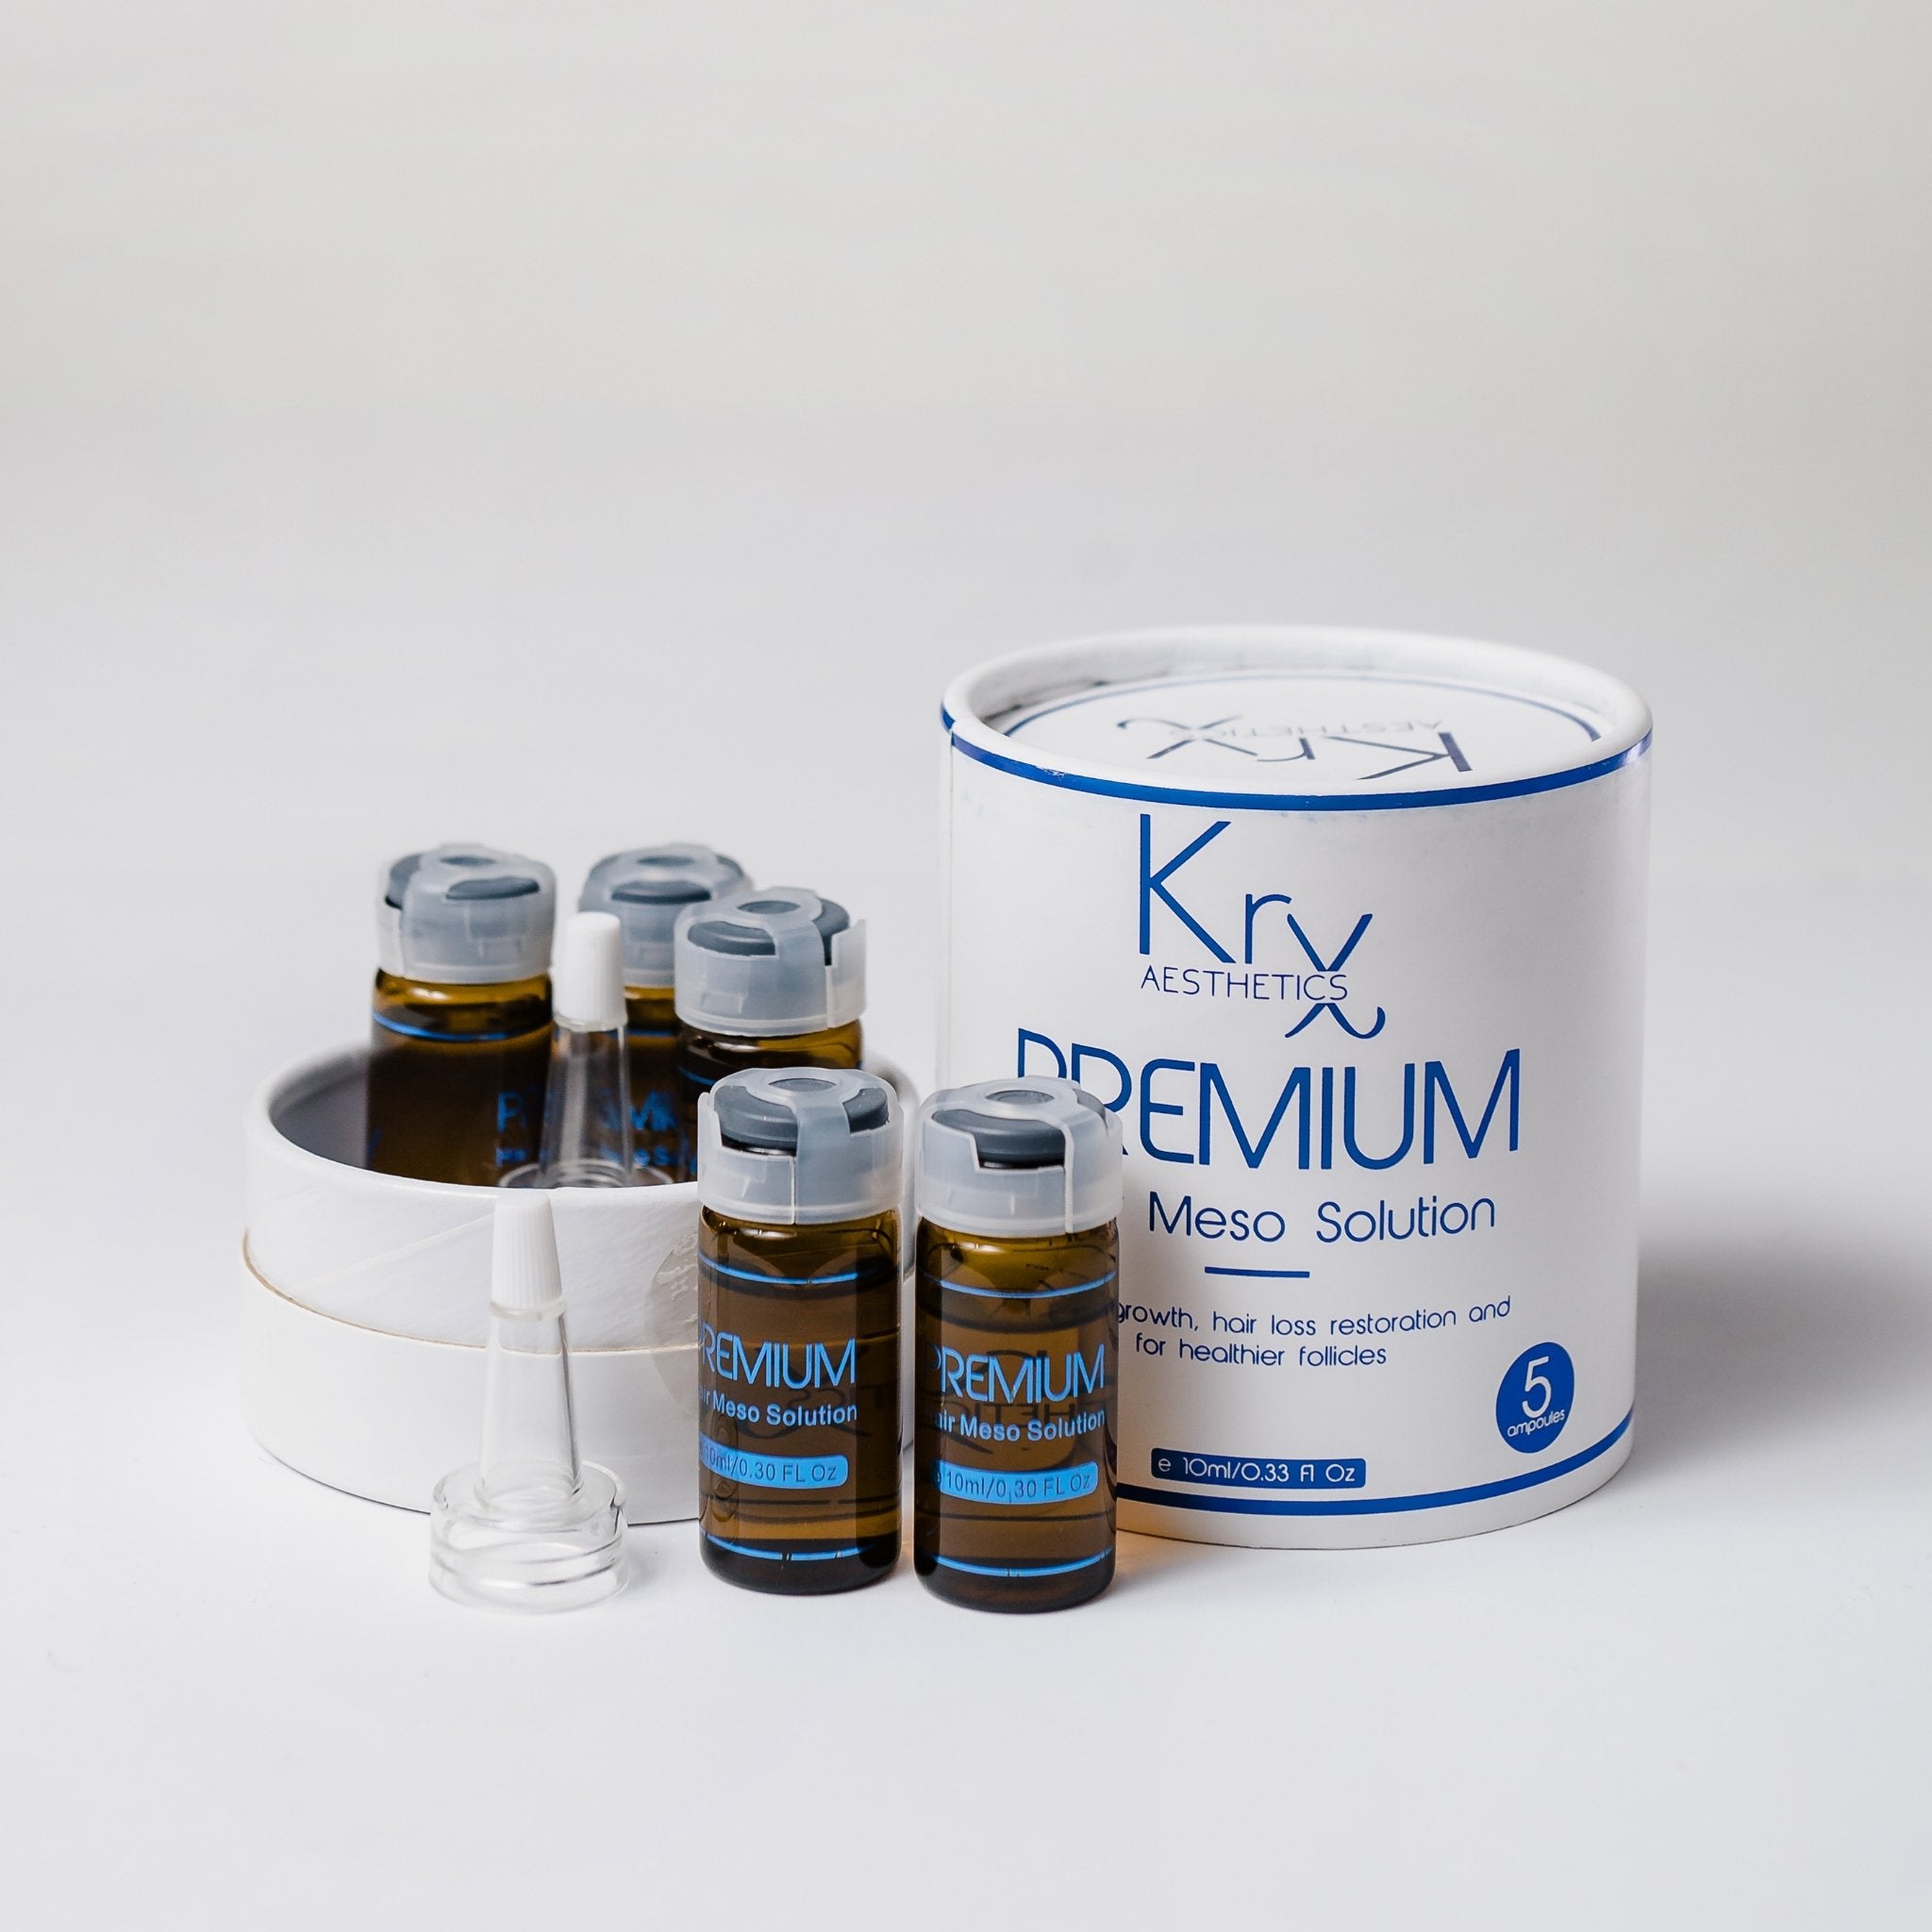 KrX Premium Meso Hair Solution - by Kin Aesthetics 